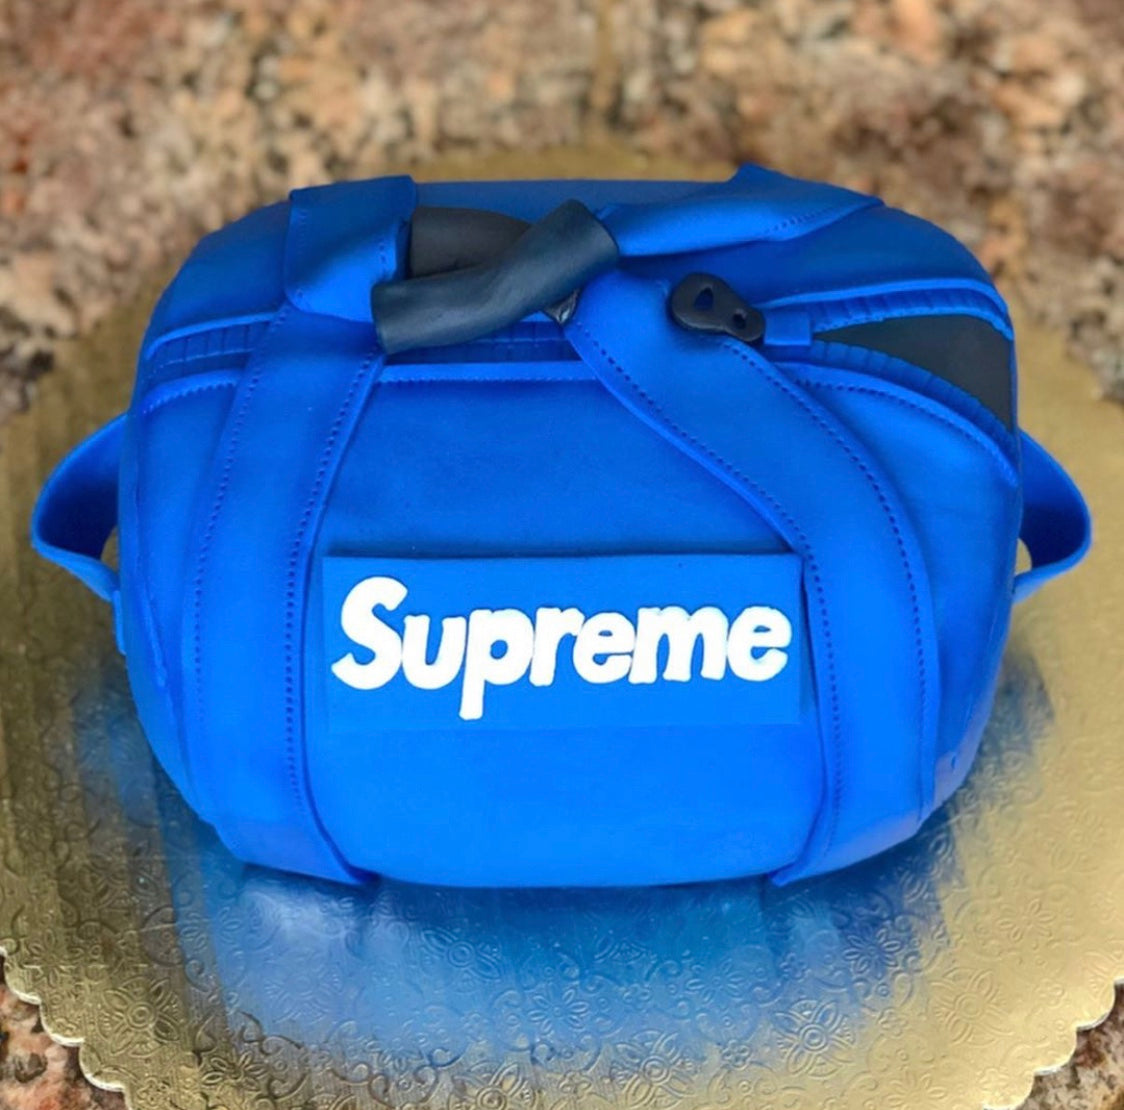 SUPREME Duffle Bag Cake – Baked by Bri